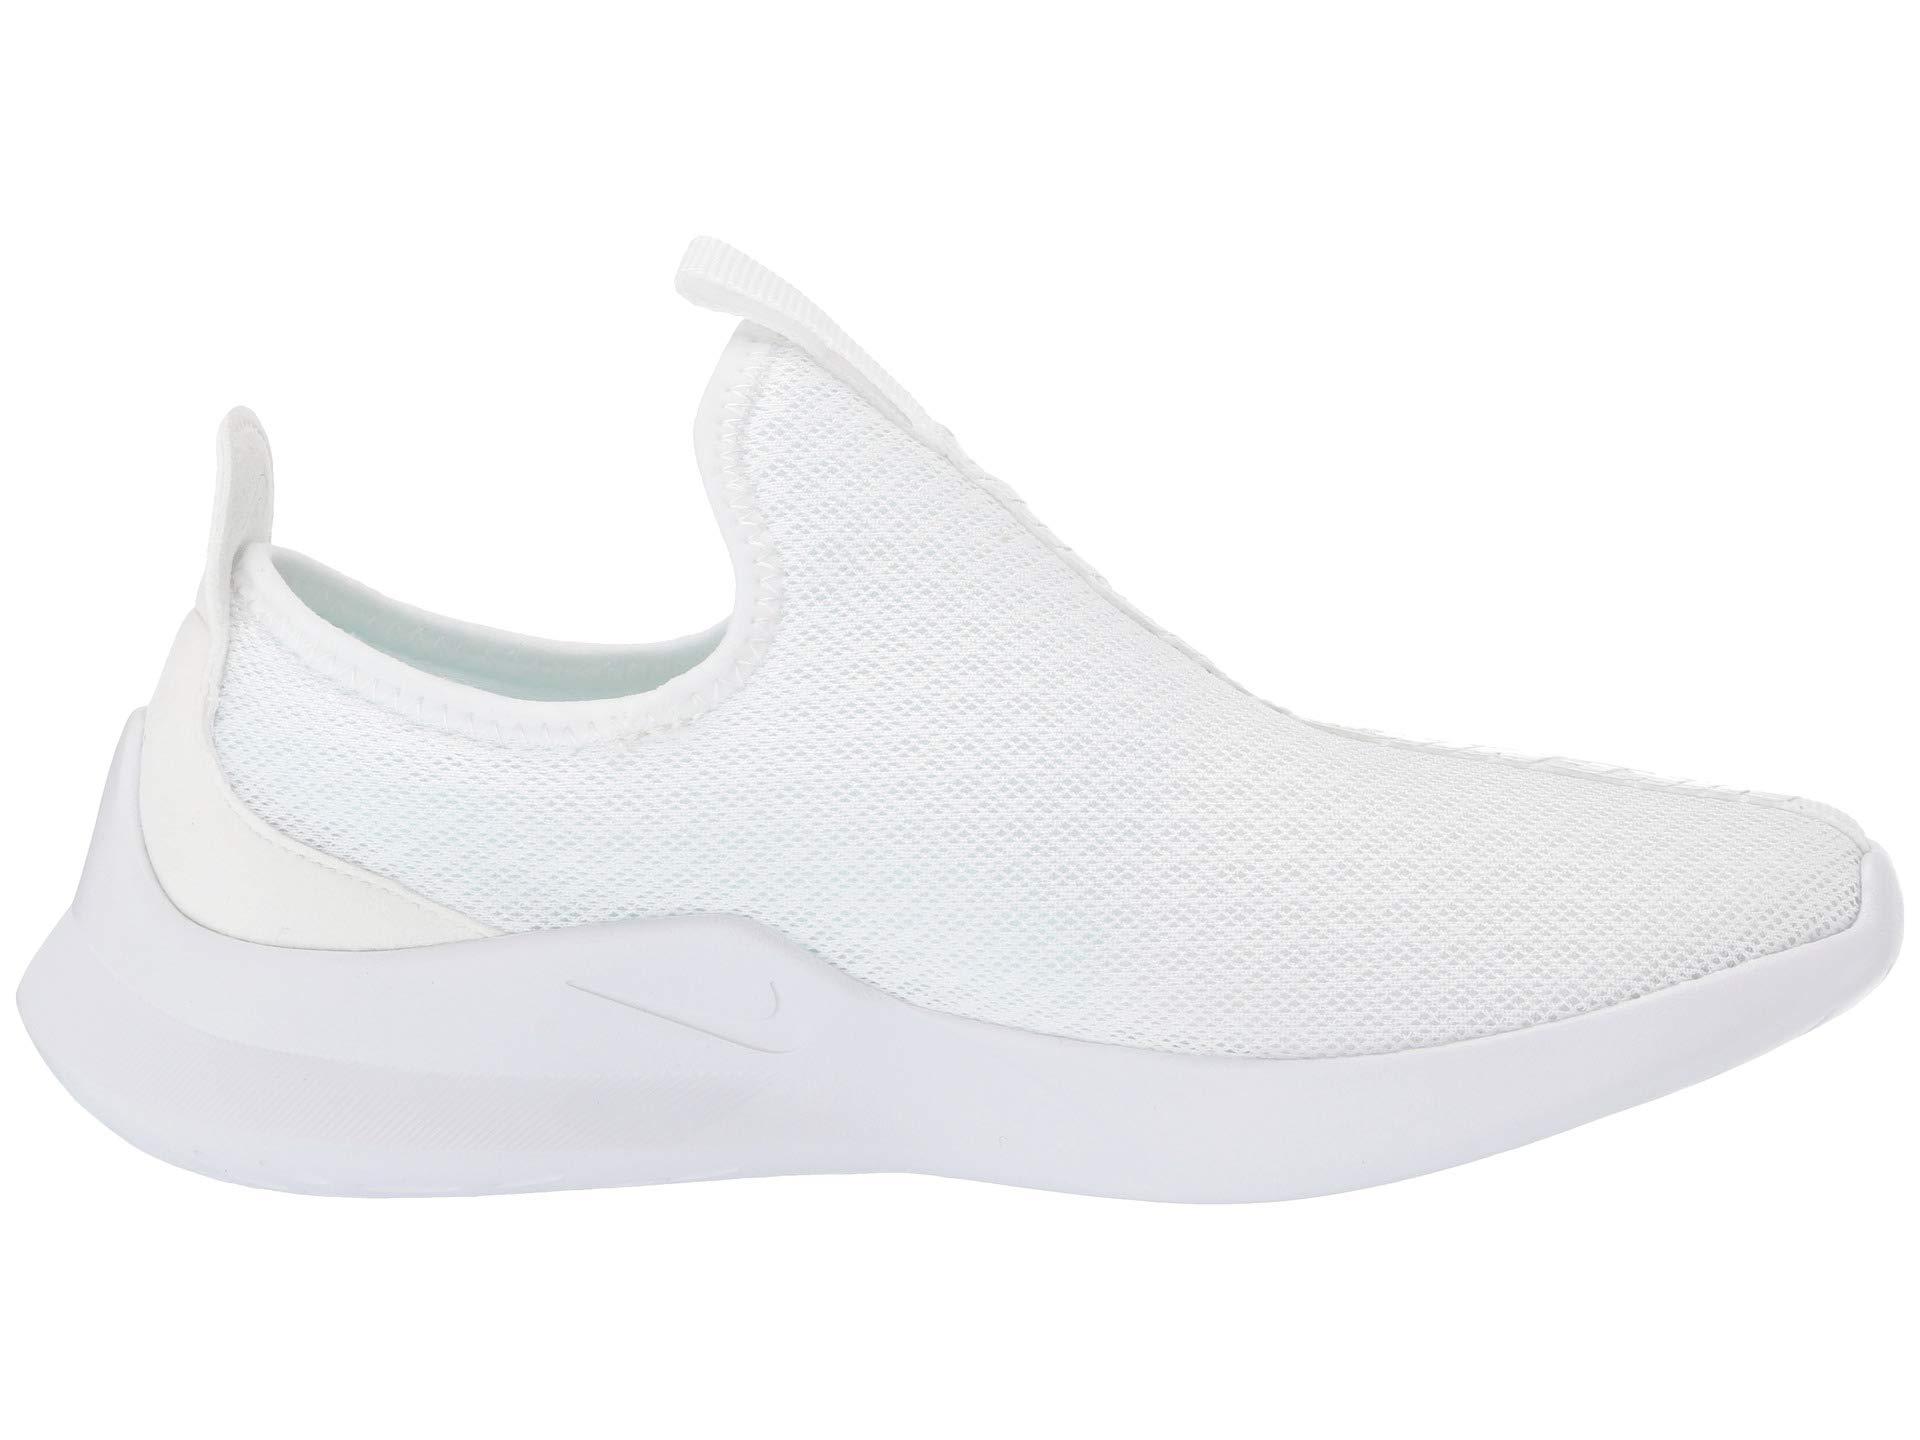 Blaast op fort metro Nike Viale Slip-on (white/white) Classic Shoes | Lyst